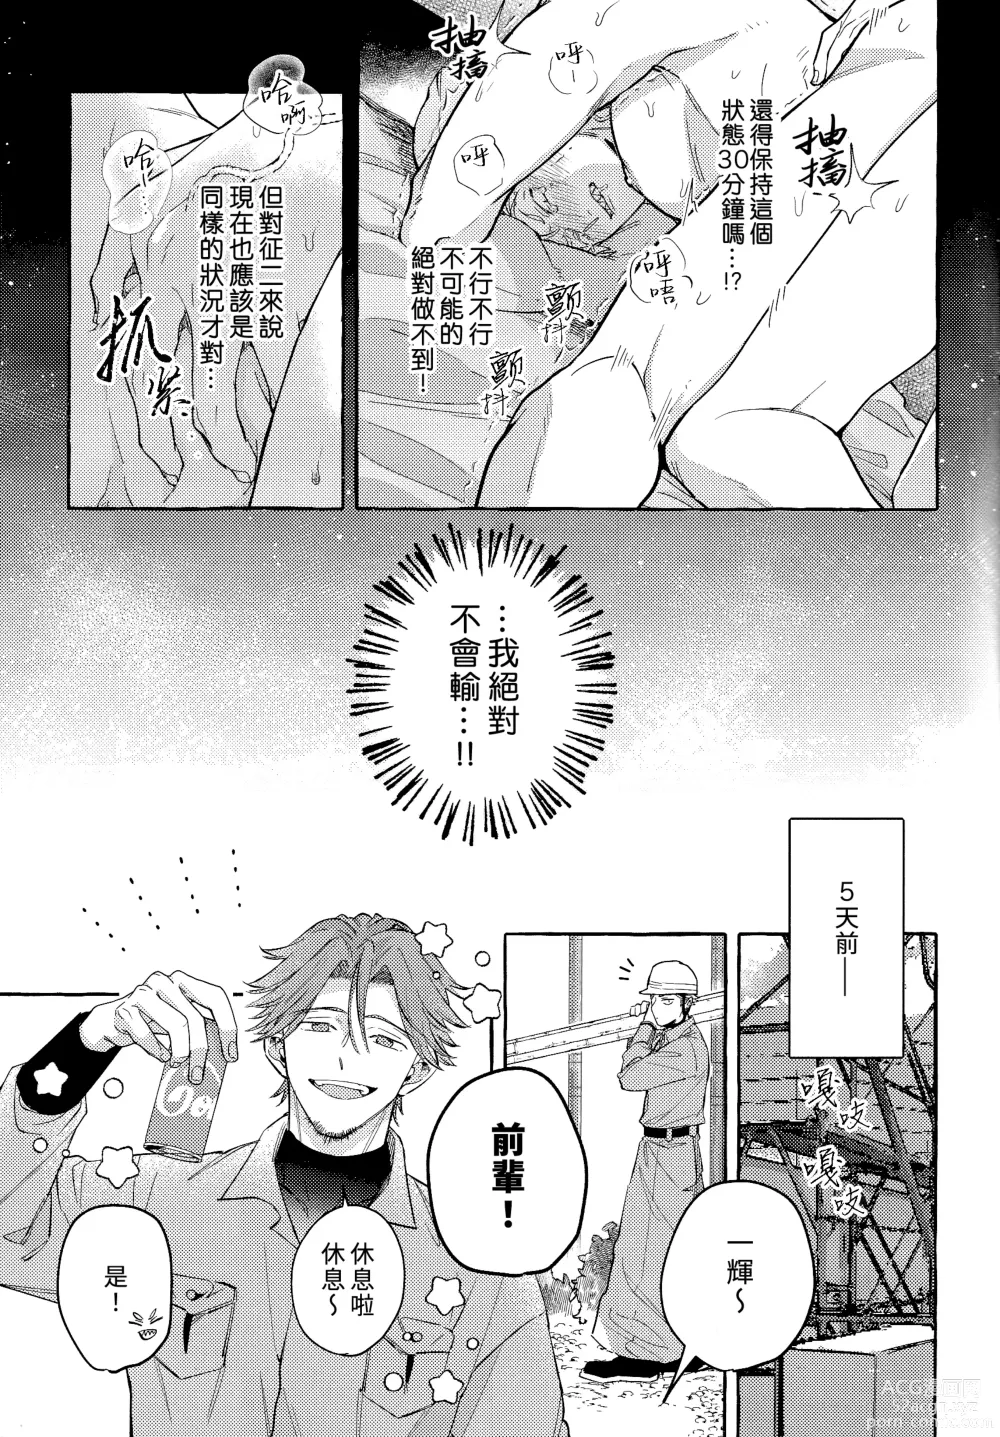 Page 6 of doujinshi skip run!run!run! (uncensored)